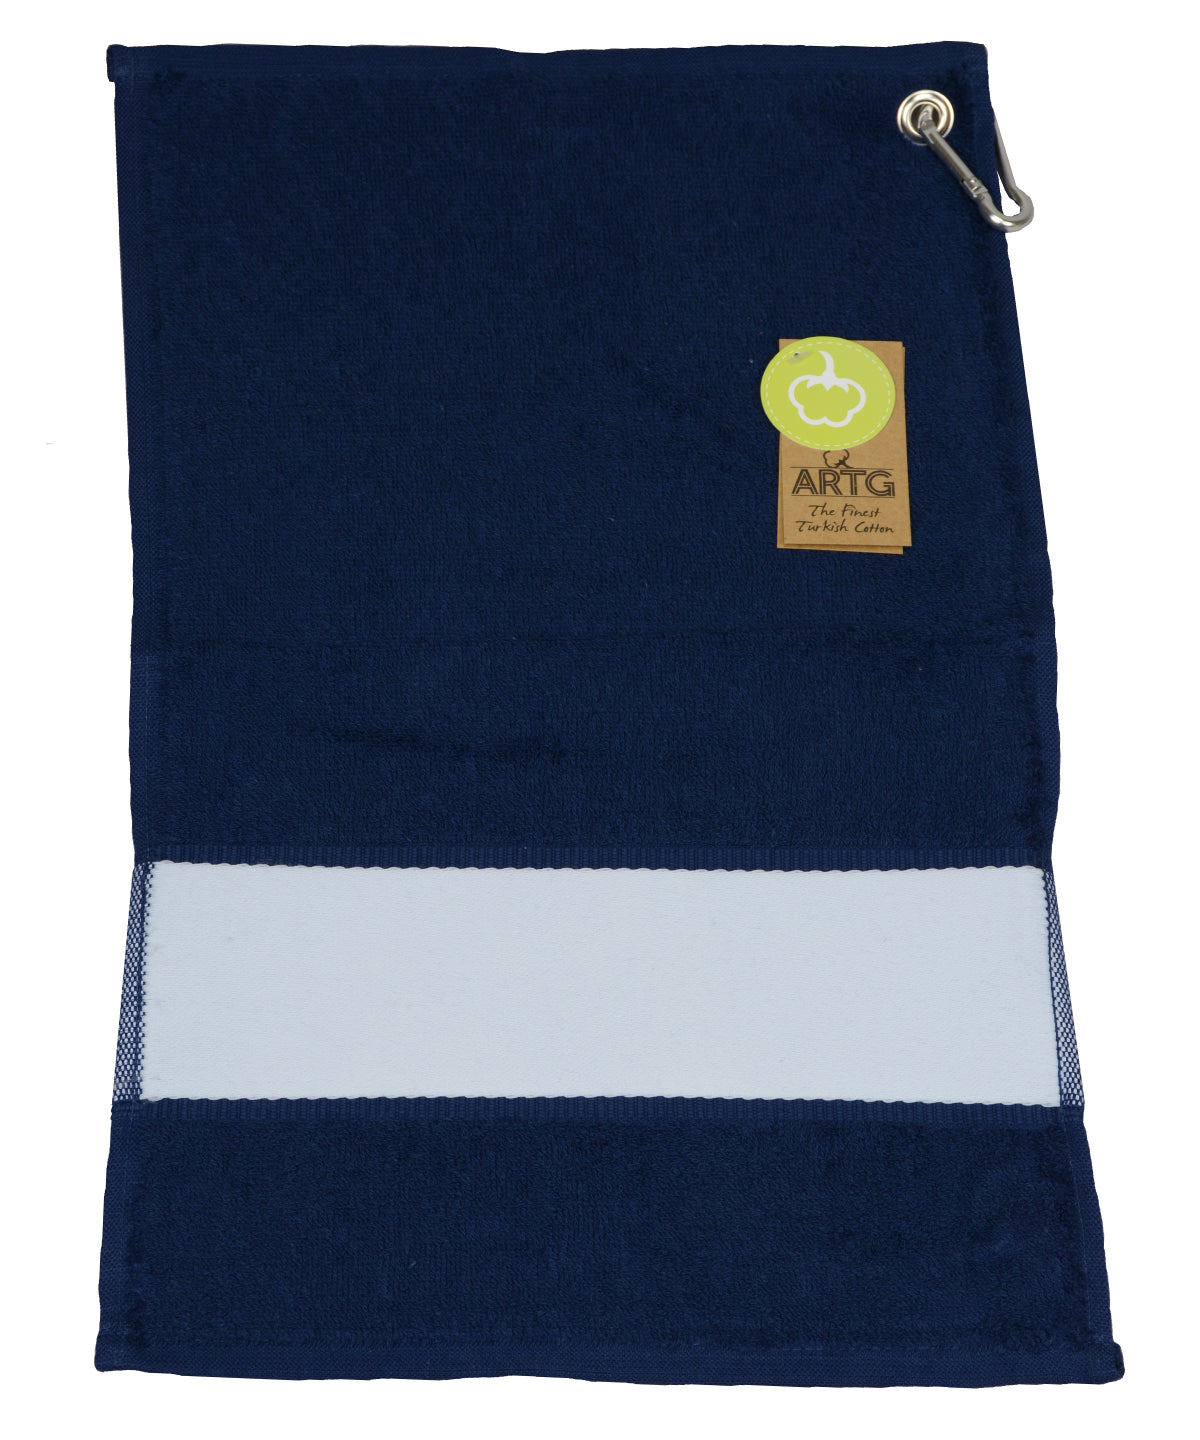 Personalised Towels - Navy A&R Towels ARTG® SUBLI-Me® golf towel